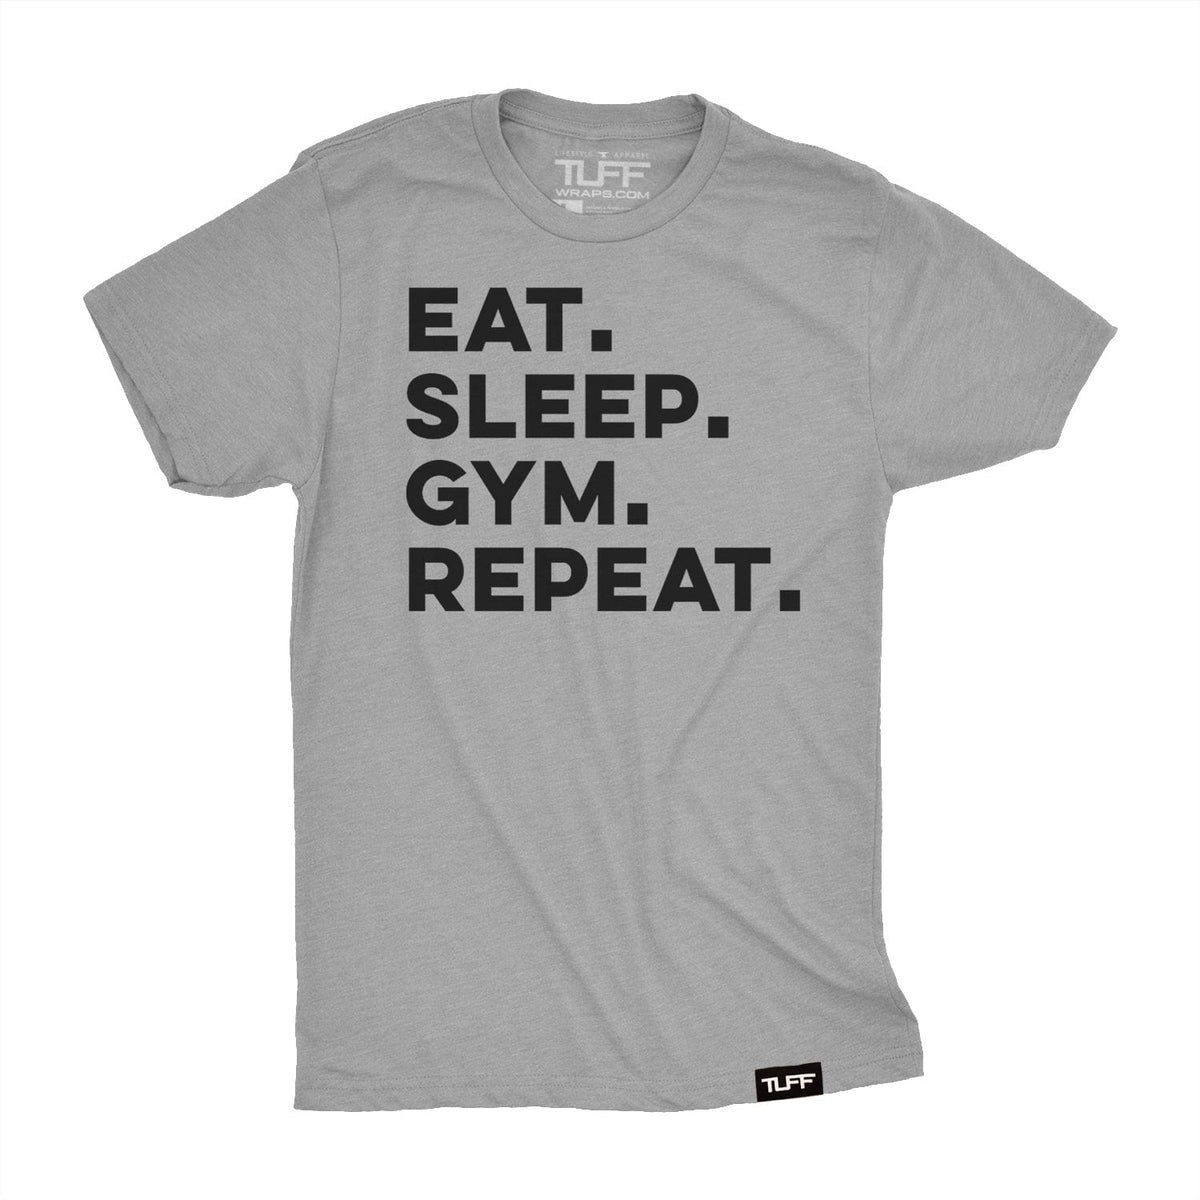 Eat. Sleep. Gym. Repeat. Tee S / Heather Gray TuffWraps.com